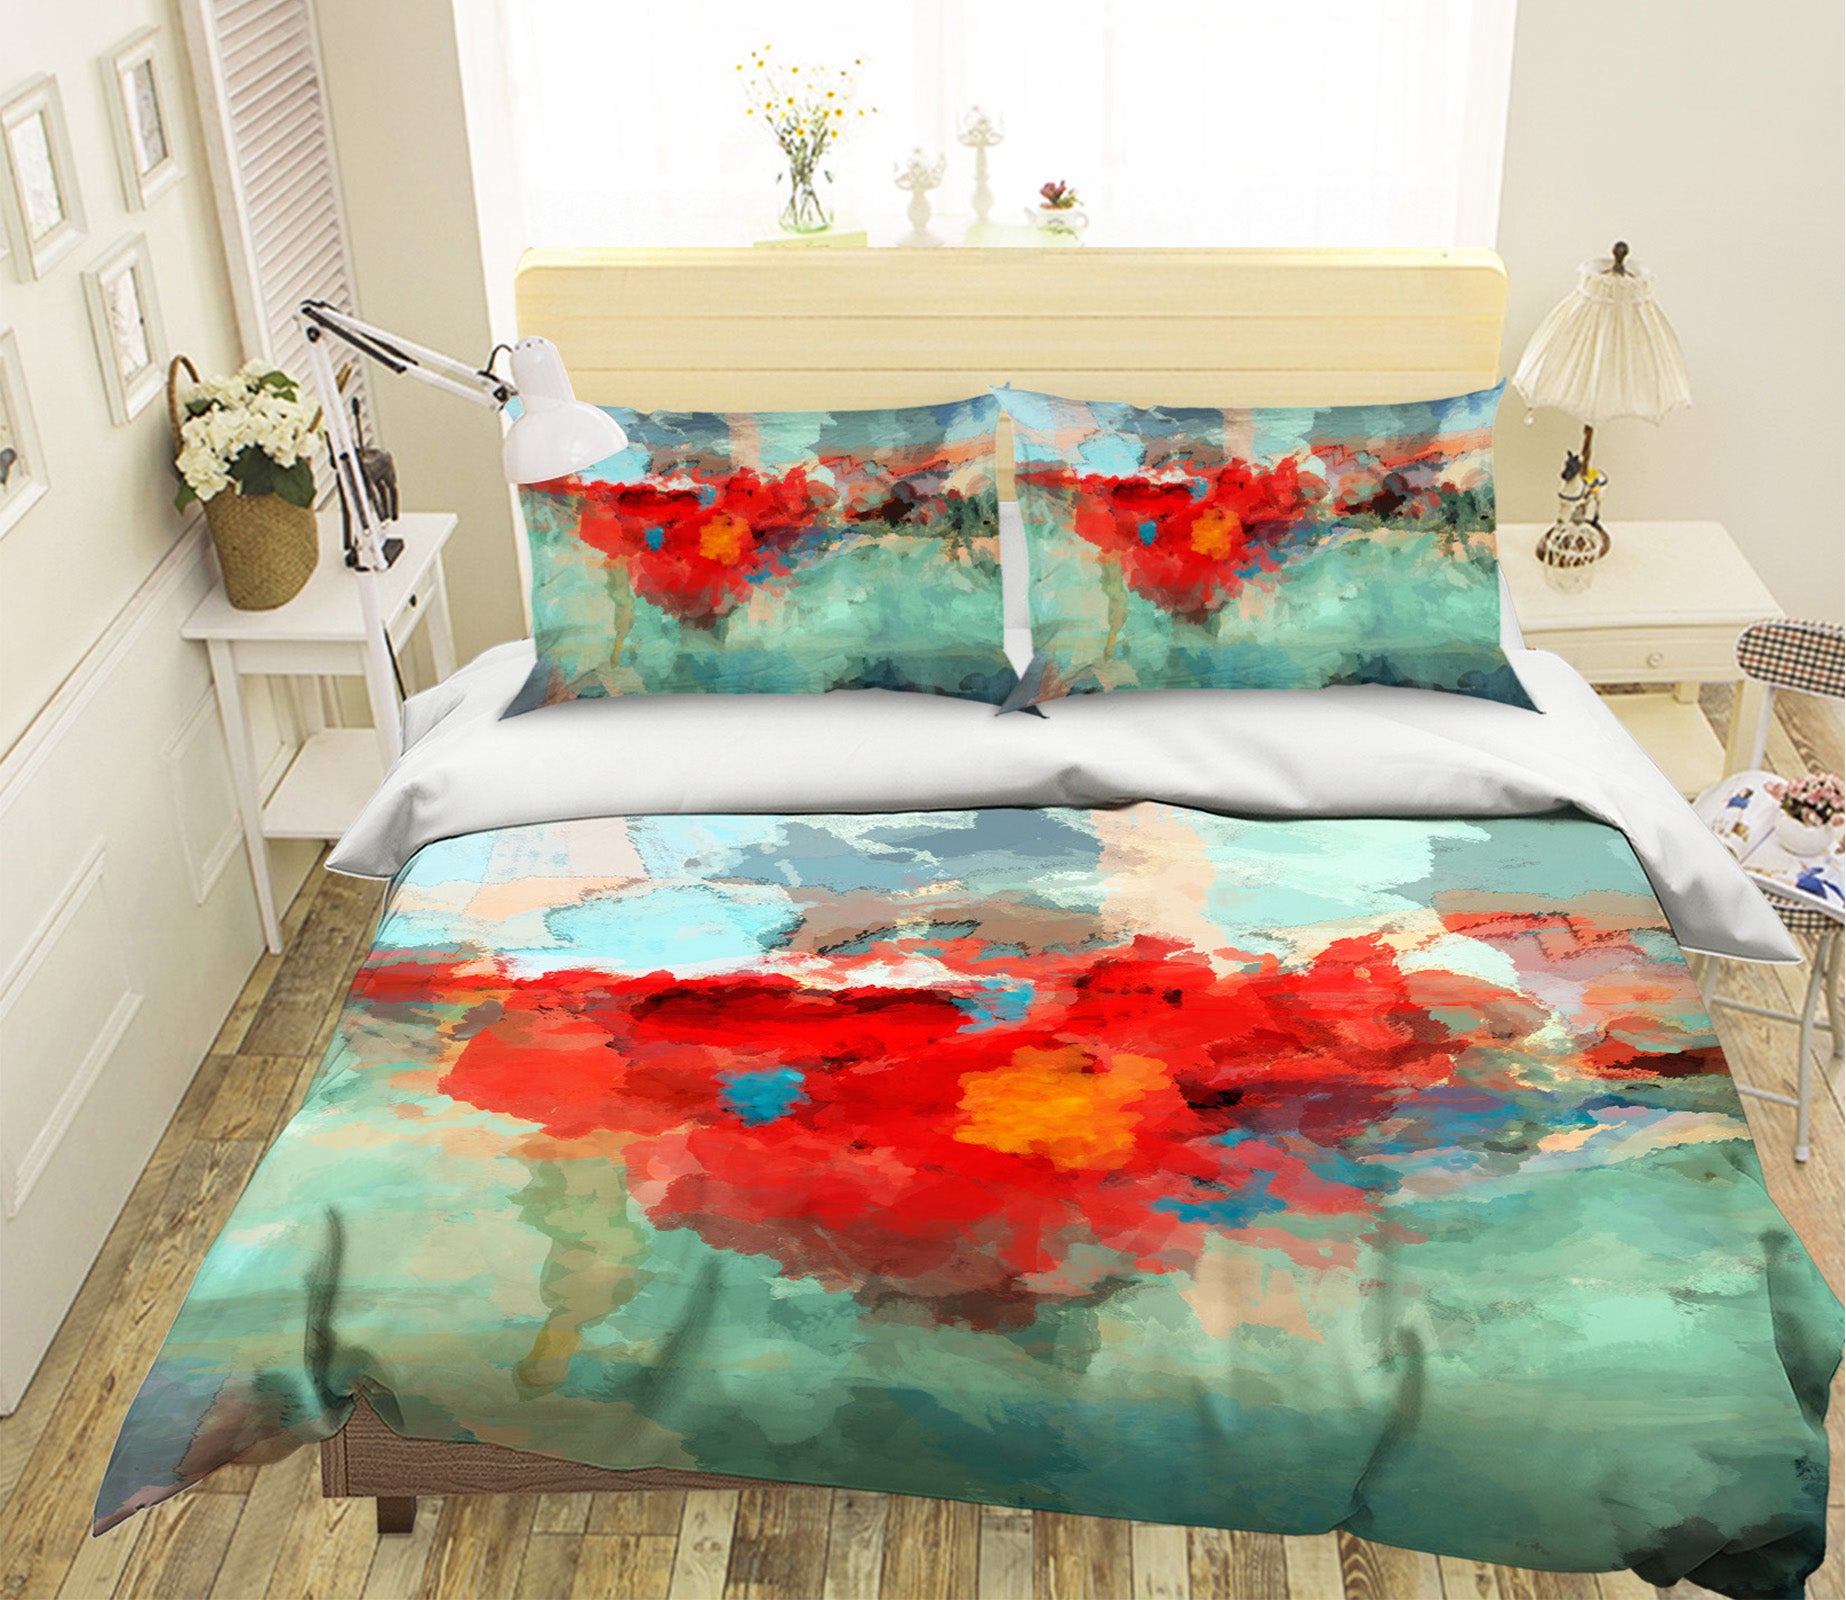 3D Red Heart Pattern 1047 Michael Tienhaara Bedding Bed Pillowcases Quilt